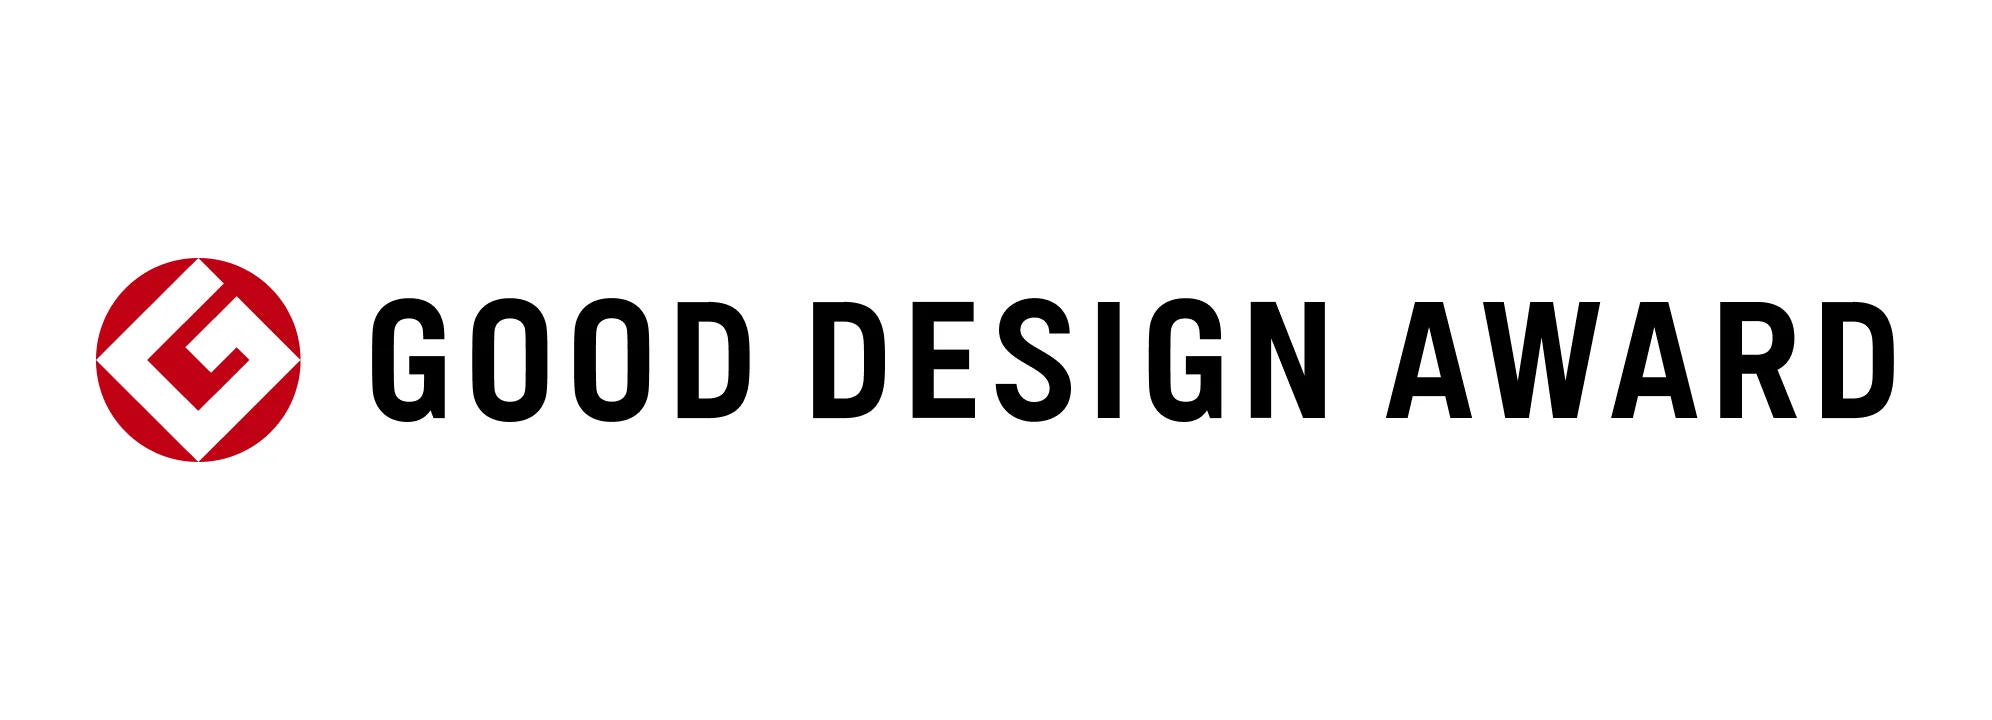 Good Design Award ロゴ